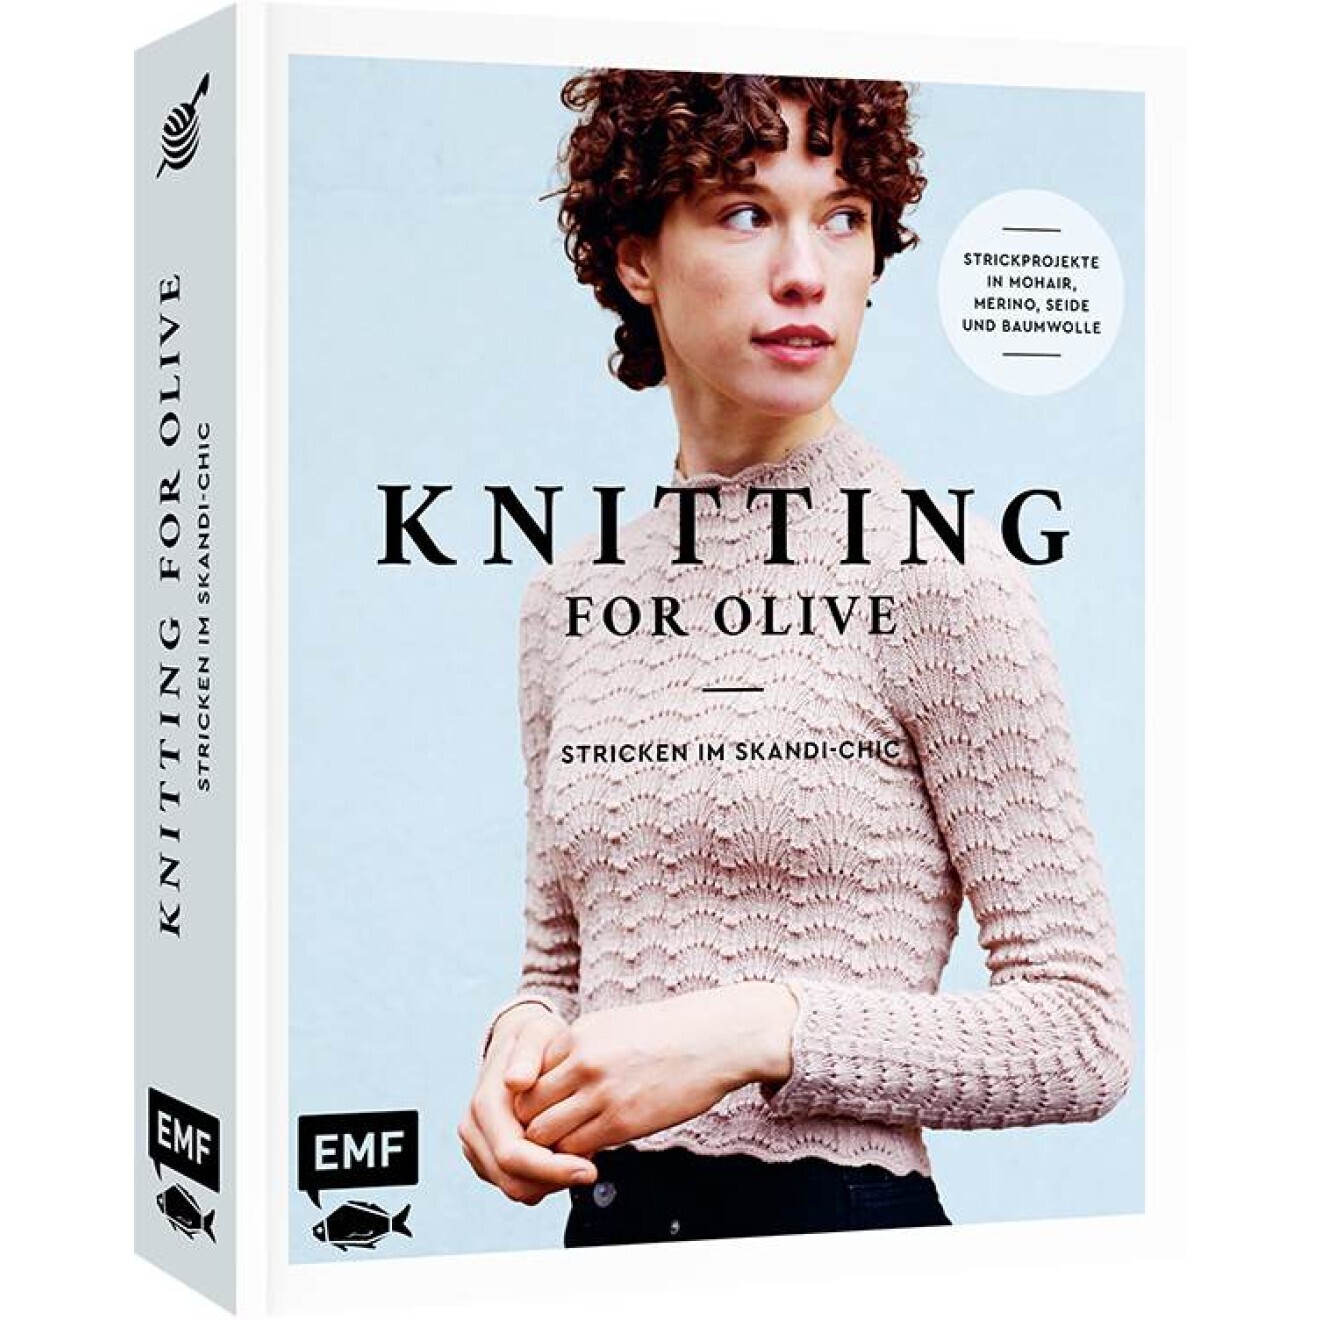 (German) Knitting for Olive - Stricken im Skandi-Chic